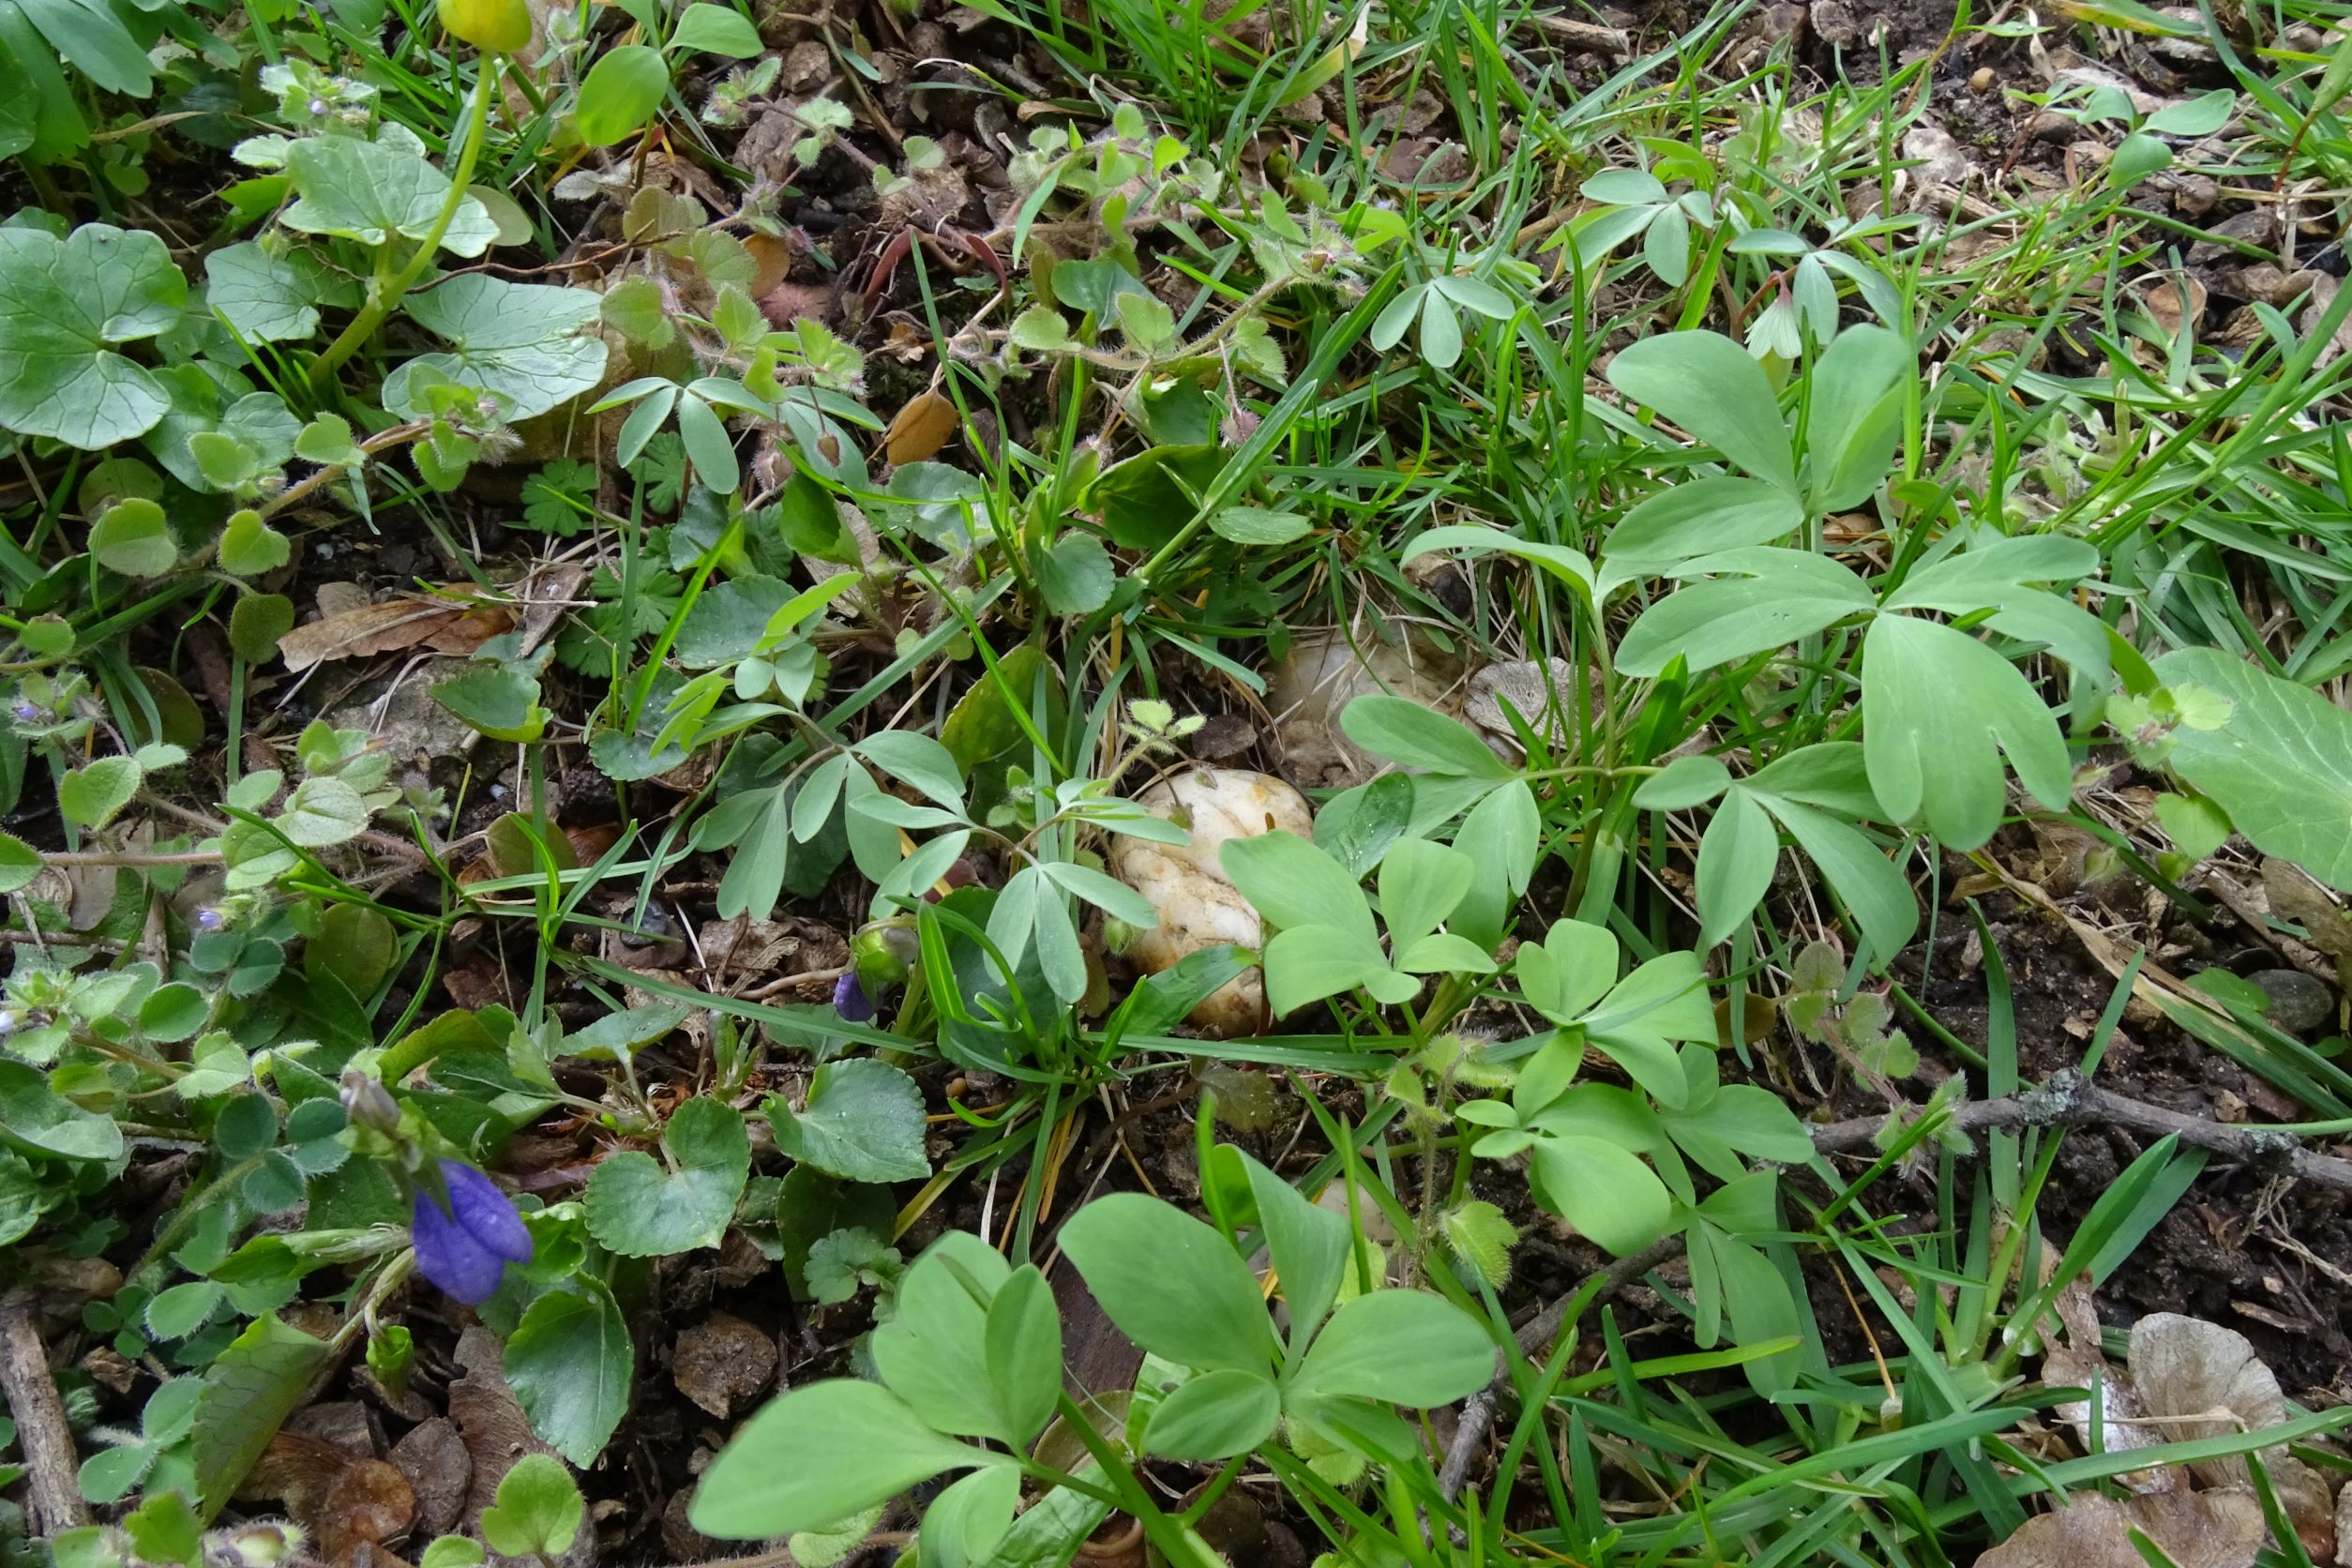 DSC02596 2022-04-02, Corydalis cava (große, grüne Blätter), C. pumila, Viola x bavarica, Ficaria verna etc., Friedhof Hainburg.JPG